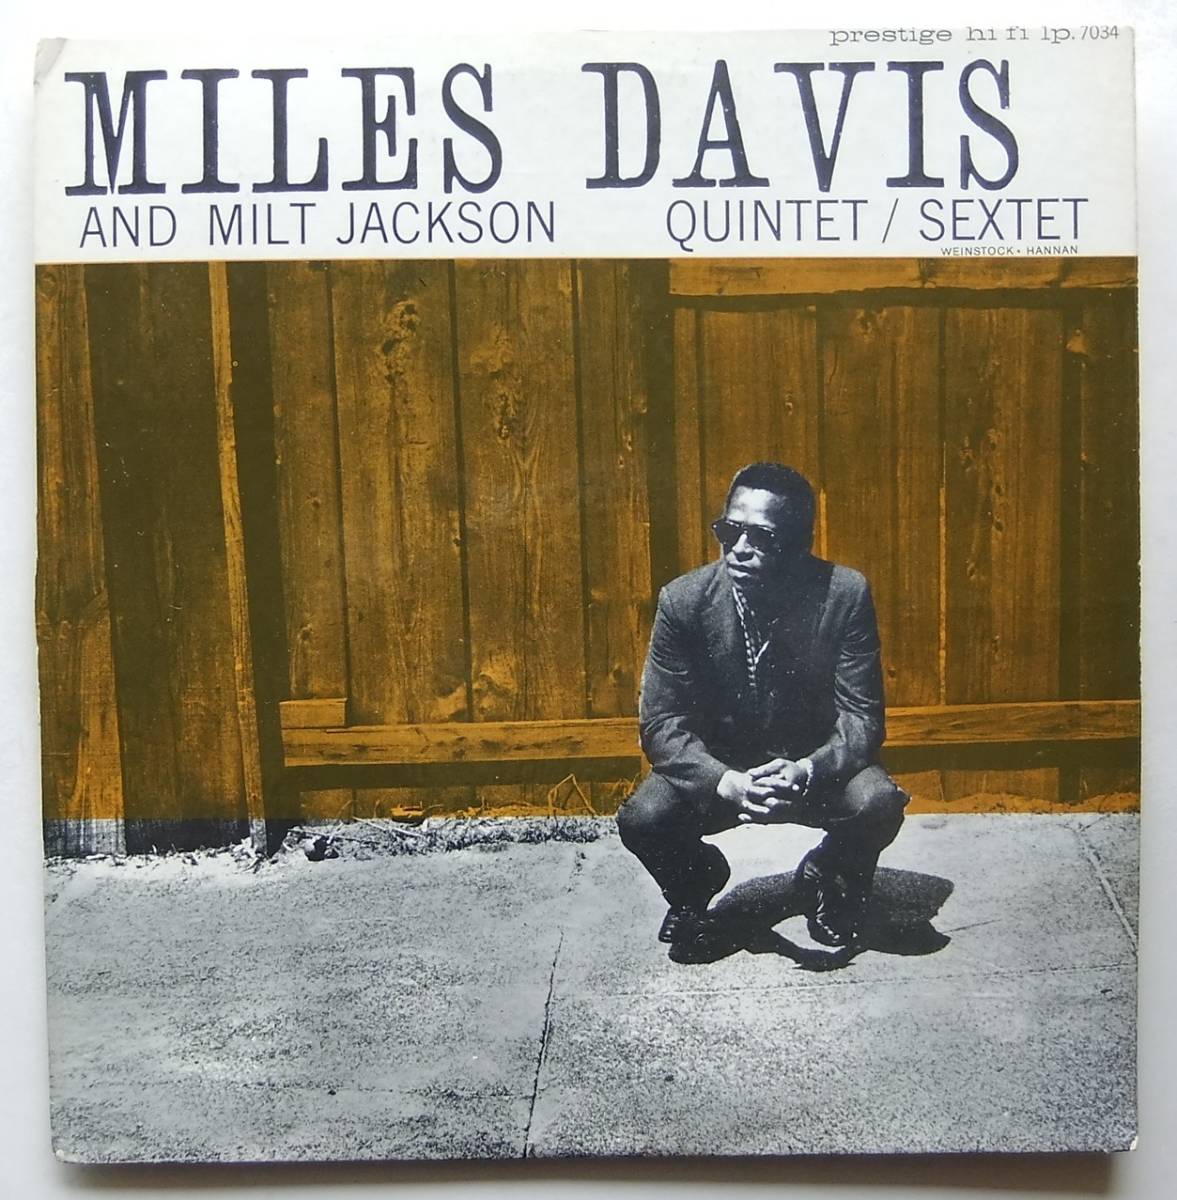 ◆ MILES DAVIS All Star Sextet / Quintet ◆ Prestige LP 7034 (yellow:NYC:dg:RVG) ◆_画像1